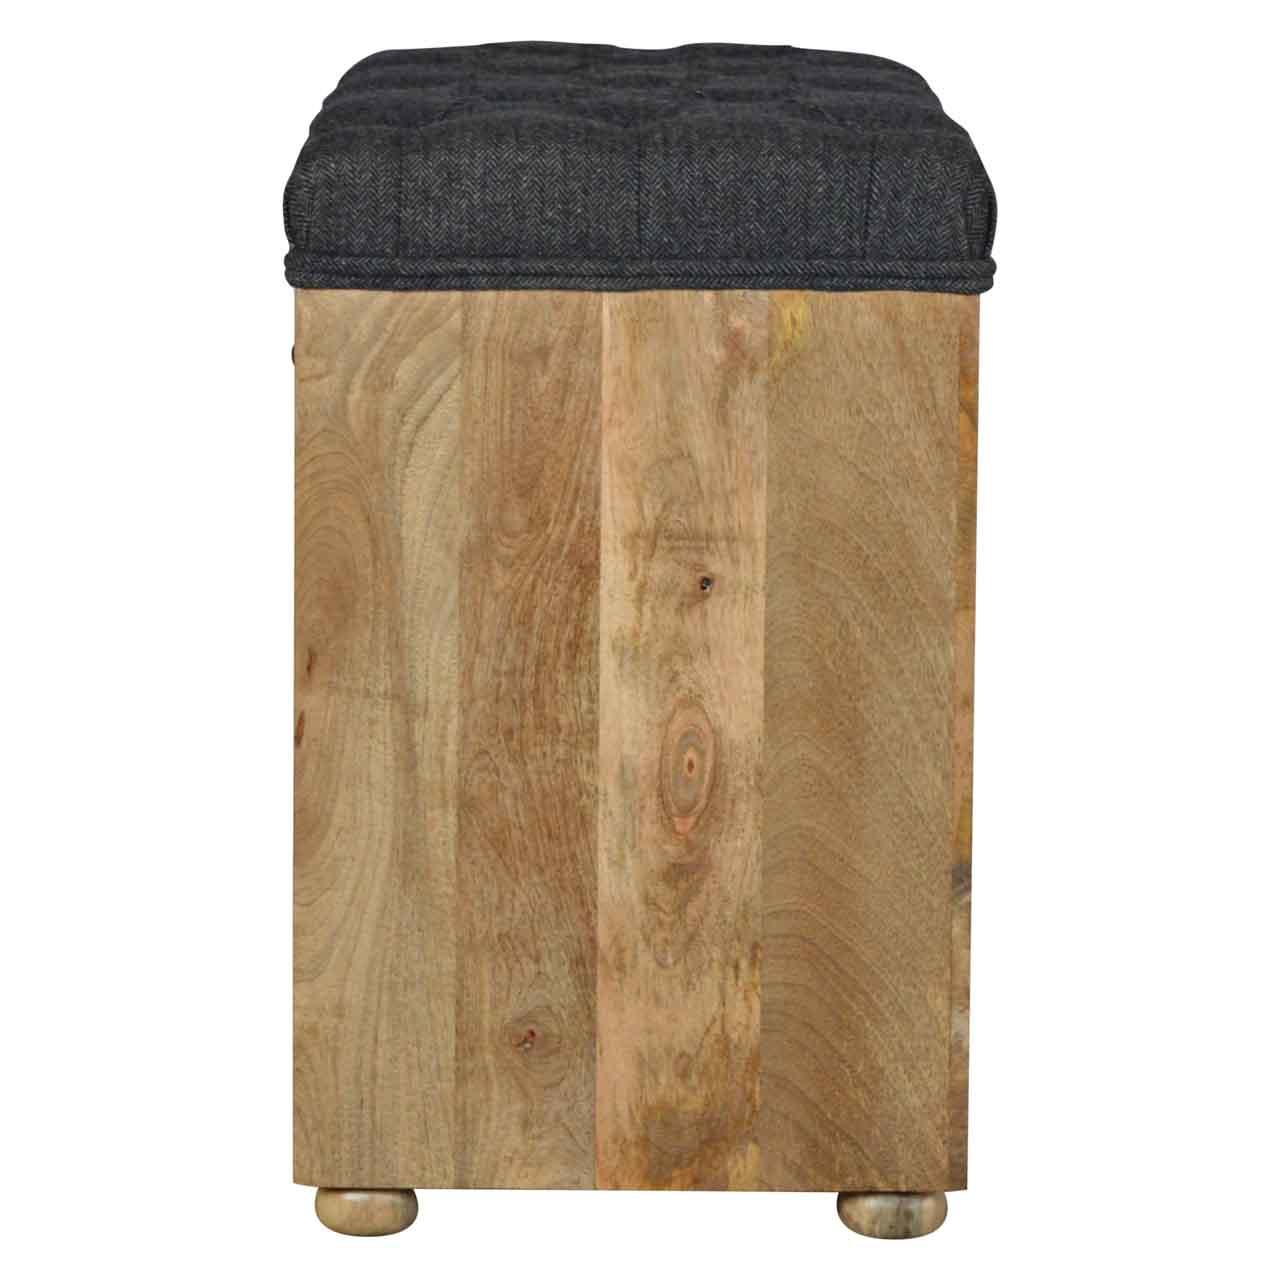 Black tweed 6 slot shoe storage bench - crimblefest furniture - image 9